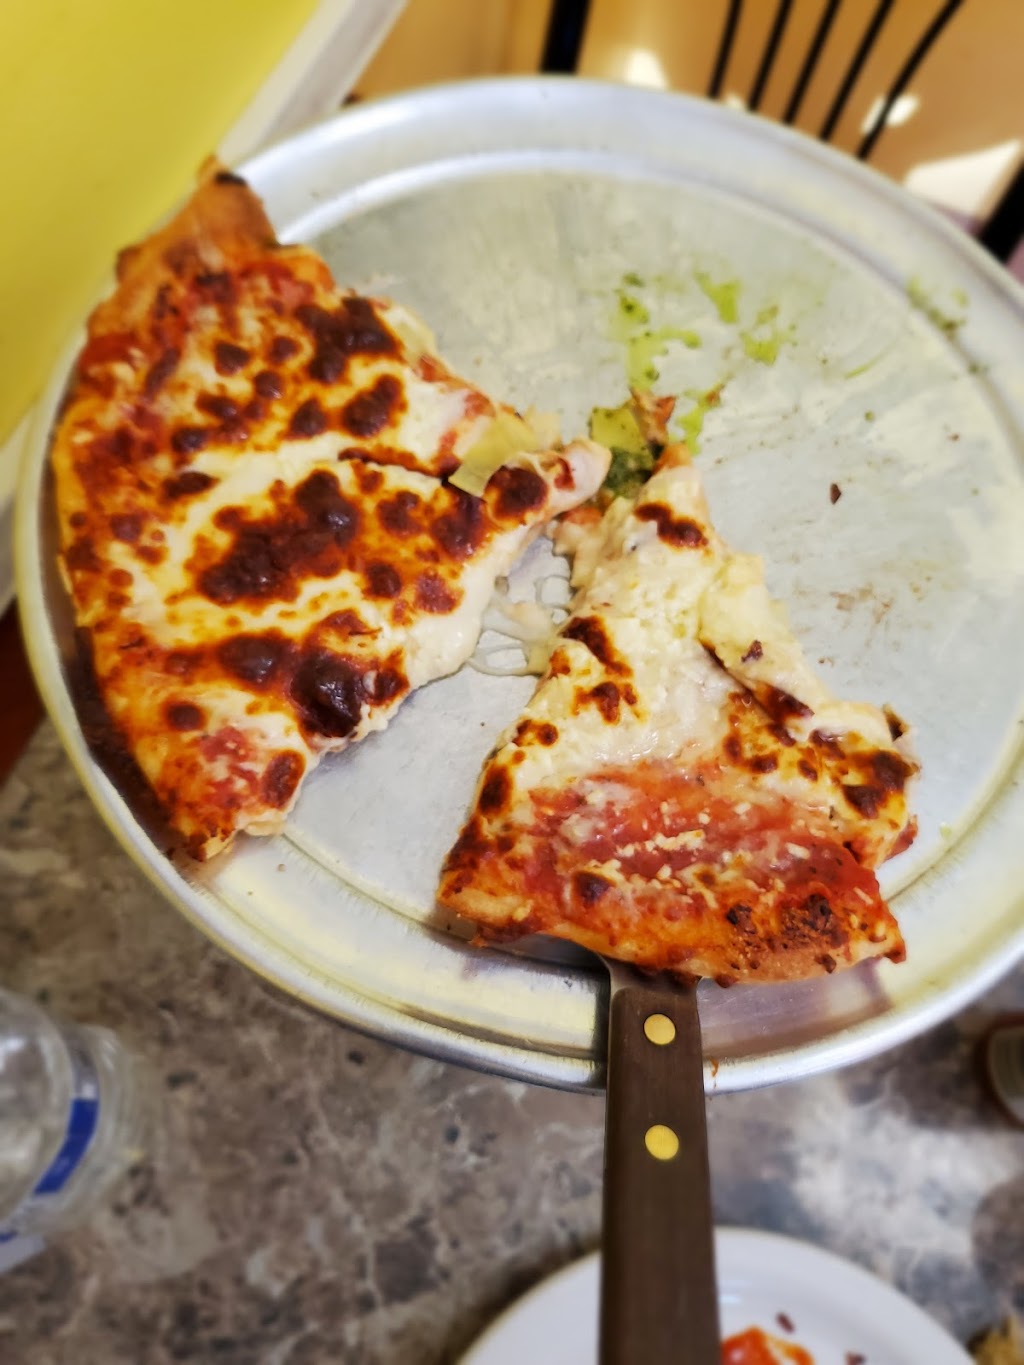 Silverlake Pizza & Pasta | 711 112th St SE Ste B, Everett, WA 98208, USA | Phone: (425) 337-4134